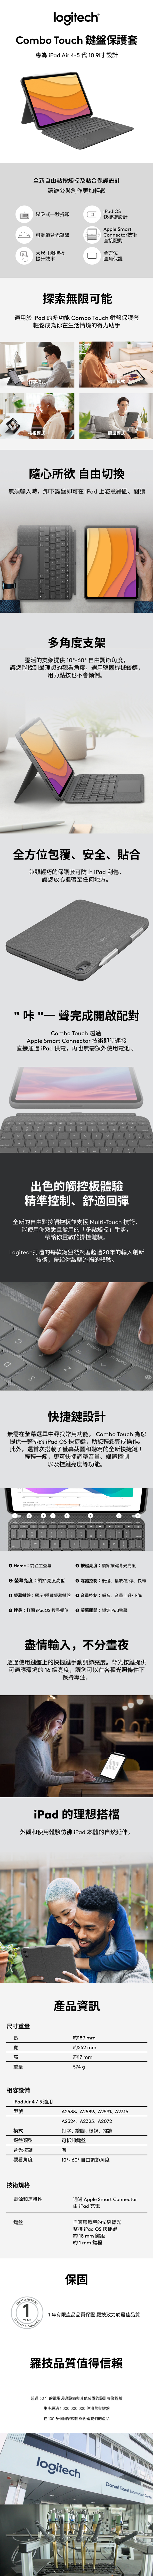 lgitech?Cmbo ouch LO@MM iPad Air -5N 9T]psIĲΦXO@]p줽PЧ@[PiPad OSϧl@ֱ]piո`ILApple SmartConnector޳NtjؤoĲO촣ɮĲvꨤO@LiAΩ iPad h\ Combo Touch LO@MPAbͬҪoOU⥴rҦøϼҦ˵Ҧ\ŪҦHߩұ ۥѤLJɨULYibiPadWNøϡB\Ūhפ[F[1-0Xۥѽո`,z̲zQ[ݨ,ΰT,ΤOI]|ɭ˥]СBwBKXUO@MiiPad ,zaܥaC?  n}ҰtCombo Touch zLApple Smart Connector ޳NYɳsqL iPad ѹq,A]LB~ϥιq C5XoERTYoPBNMX⪺ĲOǱBξA^usۥIĲOä䴩 Multi-Touch ޳N,ϥΧAxBRΪuhIĲv,aAFӪޱCLogitechyCLE۶WL20~Jзs޳N,aAVyZCrurnֱ]pLݦbù椤M`Υ\, Combo Touch zѤ@ƪ iPad OS ֱ,UzPާ@C~,٭fFùIϩMťgsֱ仴@Ĳ,iֱվ㭵qBC鱱HαG׵\C1ket AnalysisMarLorem  lor sit amet, consectetur adipiscing ,  do suspendisse ultrices gravida  coodo       labore et dolore magna aliqua.  ipsum!12Q64456890QERTYUtab10P7delete HomeeDù?ùG׽ո`GװCG׽ո`IG C鱱:hB/ȰBùL:/ÿùL  q:RBqW/UjM:}iPadOSjM  ù}:wiPadùɱJ,ީ]zLϥLWֱʽո`GסCI䴣ѥiAҪ16ūG,ziHbUإӱUOM`CiPad zQfɥ~[MϥϩiPad 骺۵MC~Tؤoq189 mm252mme17 mmq574 gۮe]iPad Air 4/5AΫA2588BA2589BA2591BA2316A2324BA2325BA2072rBøϡB˵B\ŪҦLiLI[ݨ10X- 60Xۥѽո`ק޳NWqMsLqLApple Smart Connector iPad Rq۾AҪ16ŭI iPad OS ֱ 18mm Z1mm {PRODUCTOT1 1~~~O ùޭPǪΫ~LIMITEDYEARASSURANCEQUALITYùޫ~ȱoHWL 30 ~qg]ƻPL˸m]pM~gͲWL1,000,000,000ƹPLb 100 hӰaPPgPڭ̪~logitechDaniel Borel Innovation Center